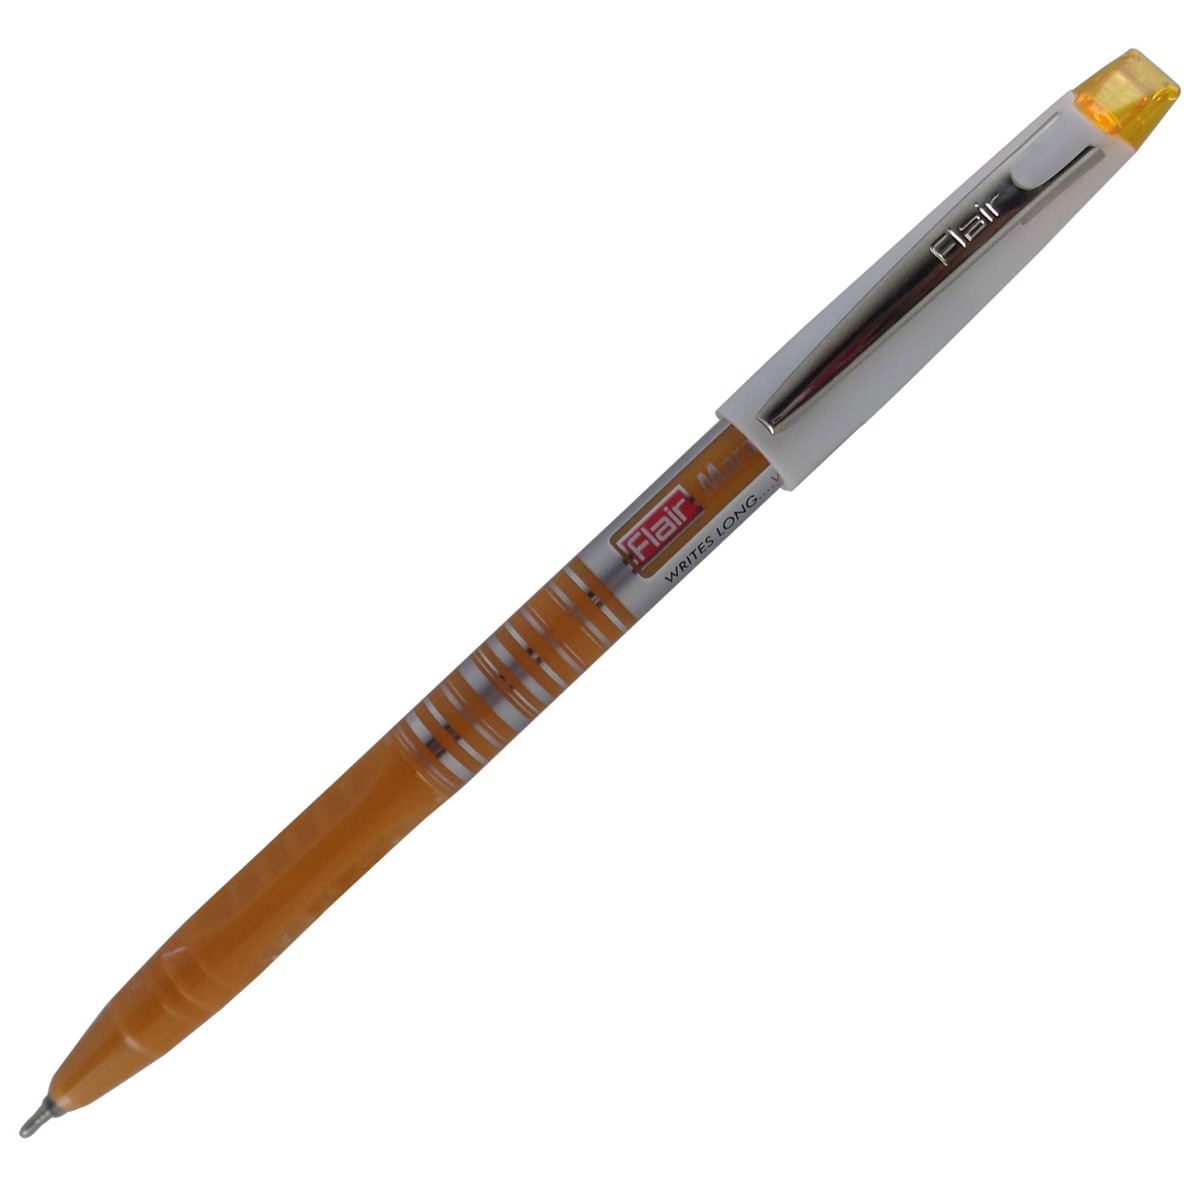 Flair Model ; 13488 Flair Marathon Yellow Color Body With Cap Type Ball Pen single